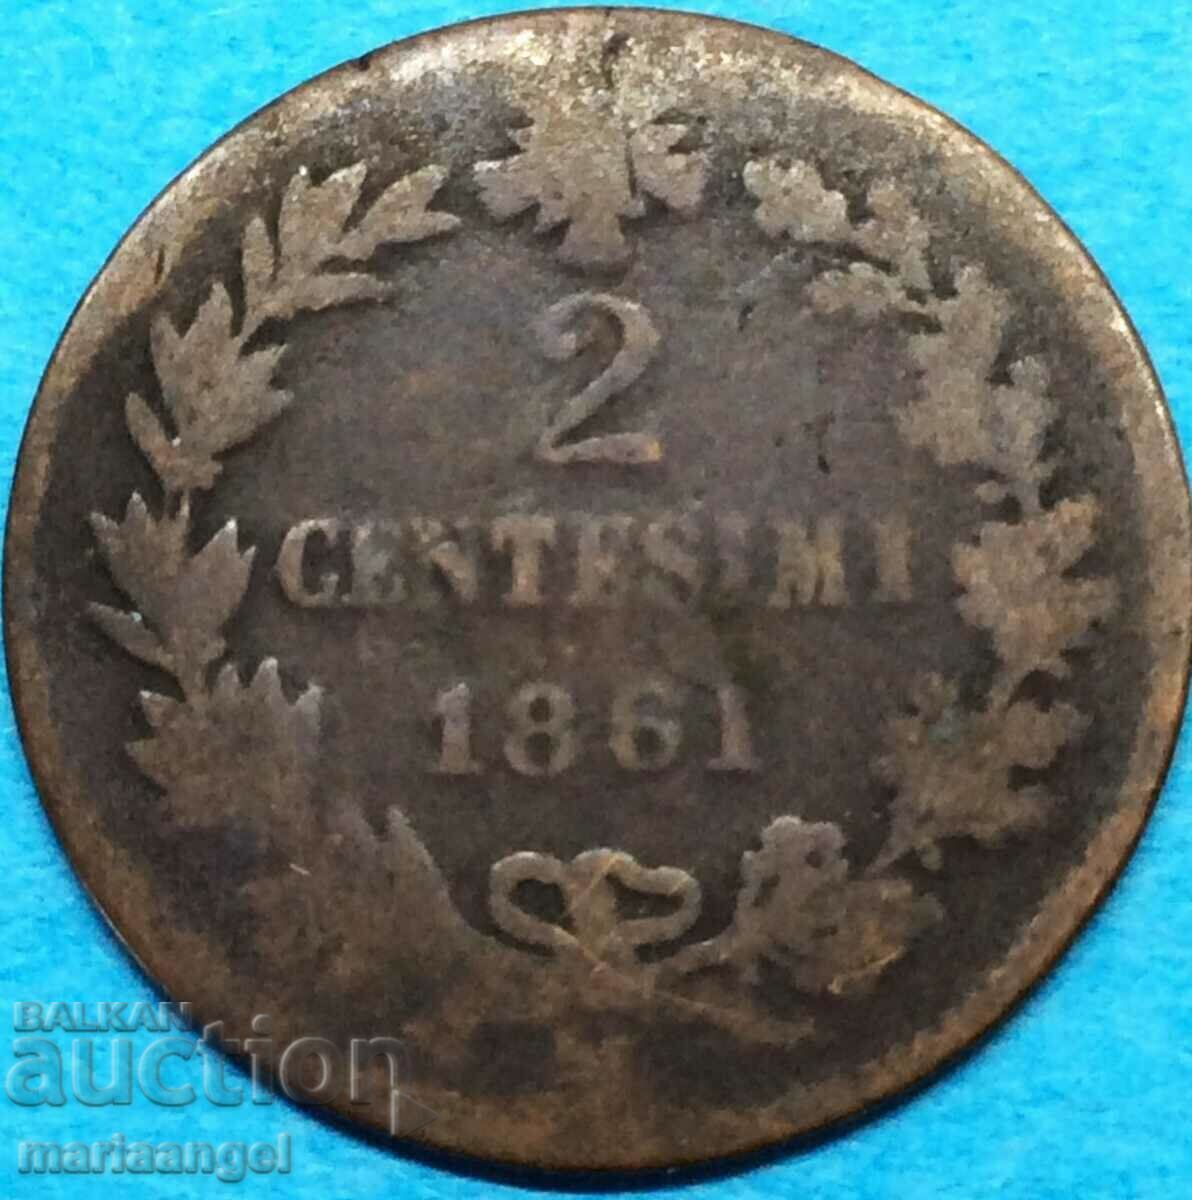 2 centesimi 1861 Ιταλία Μ - Μιλάνο